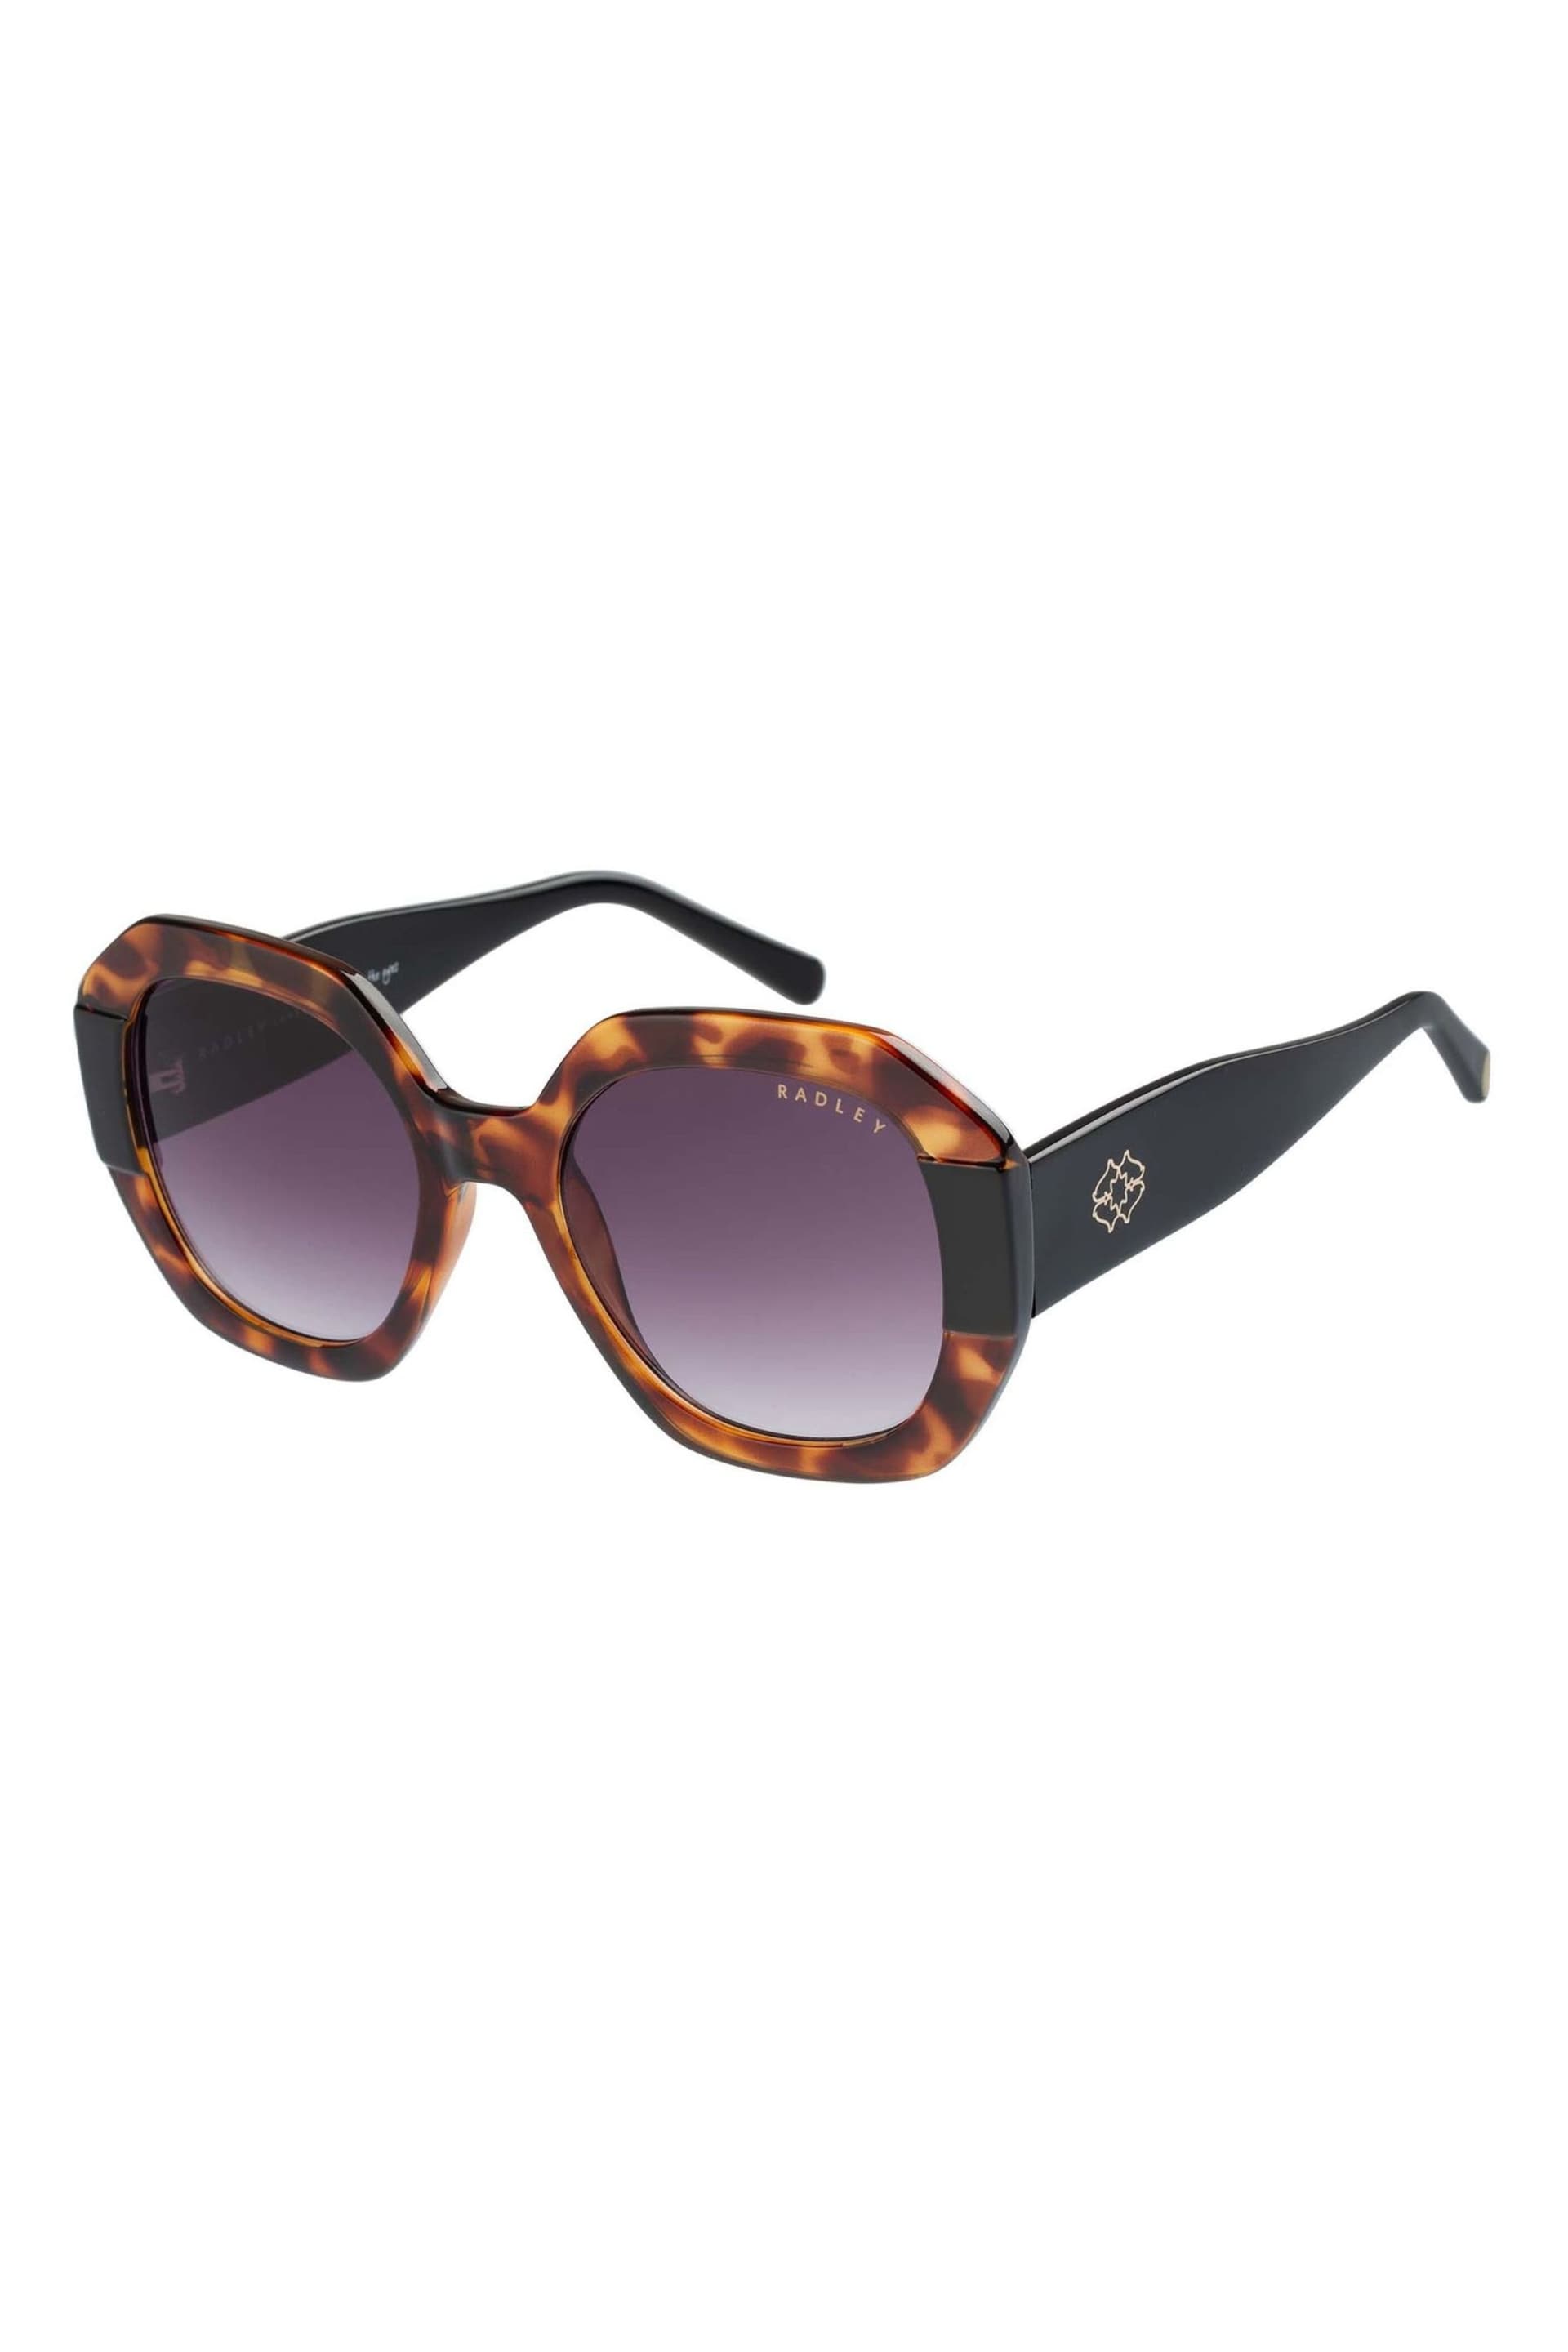 Radley Oversized 6522 Tortoiseshell Brown Sunglasses - Image 2 of 2